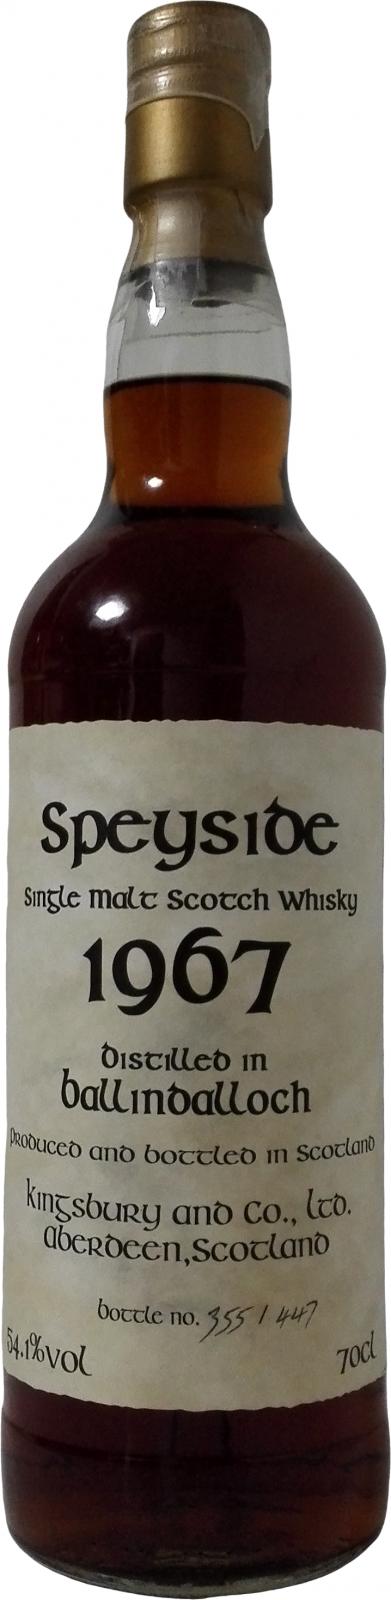 Speyside distilled in Ballindalloch 1967 Kb Celtic Series Sherry 54.1% 700ml